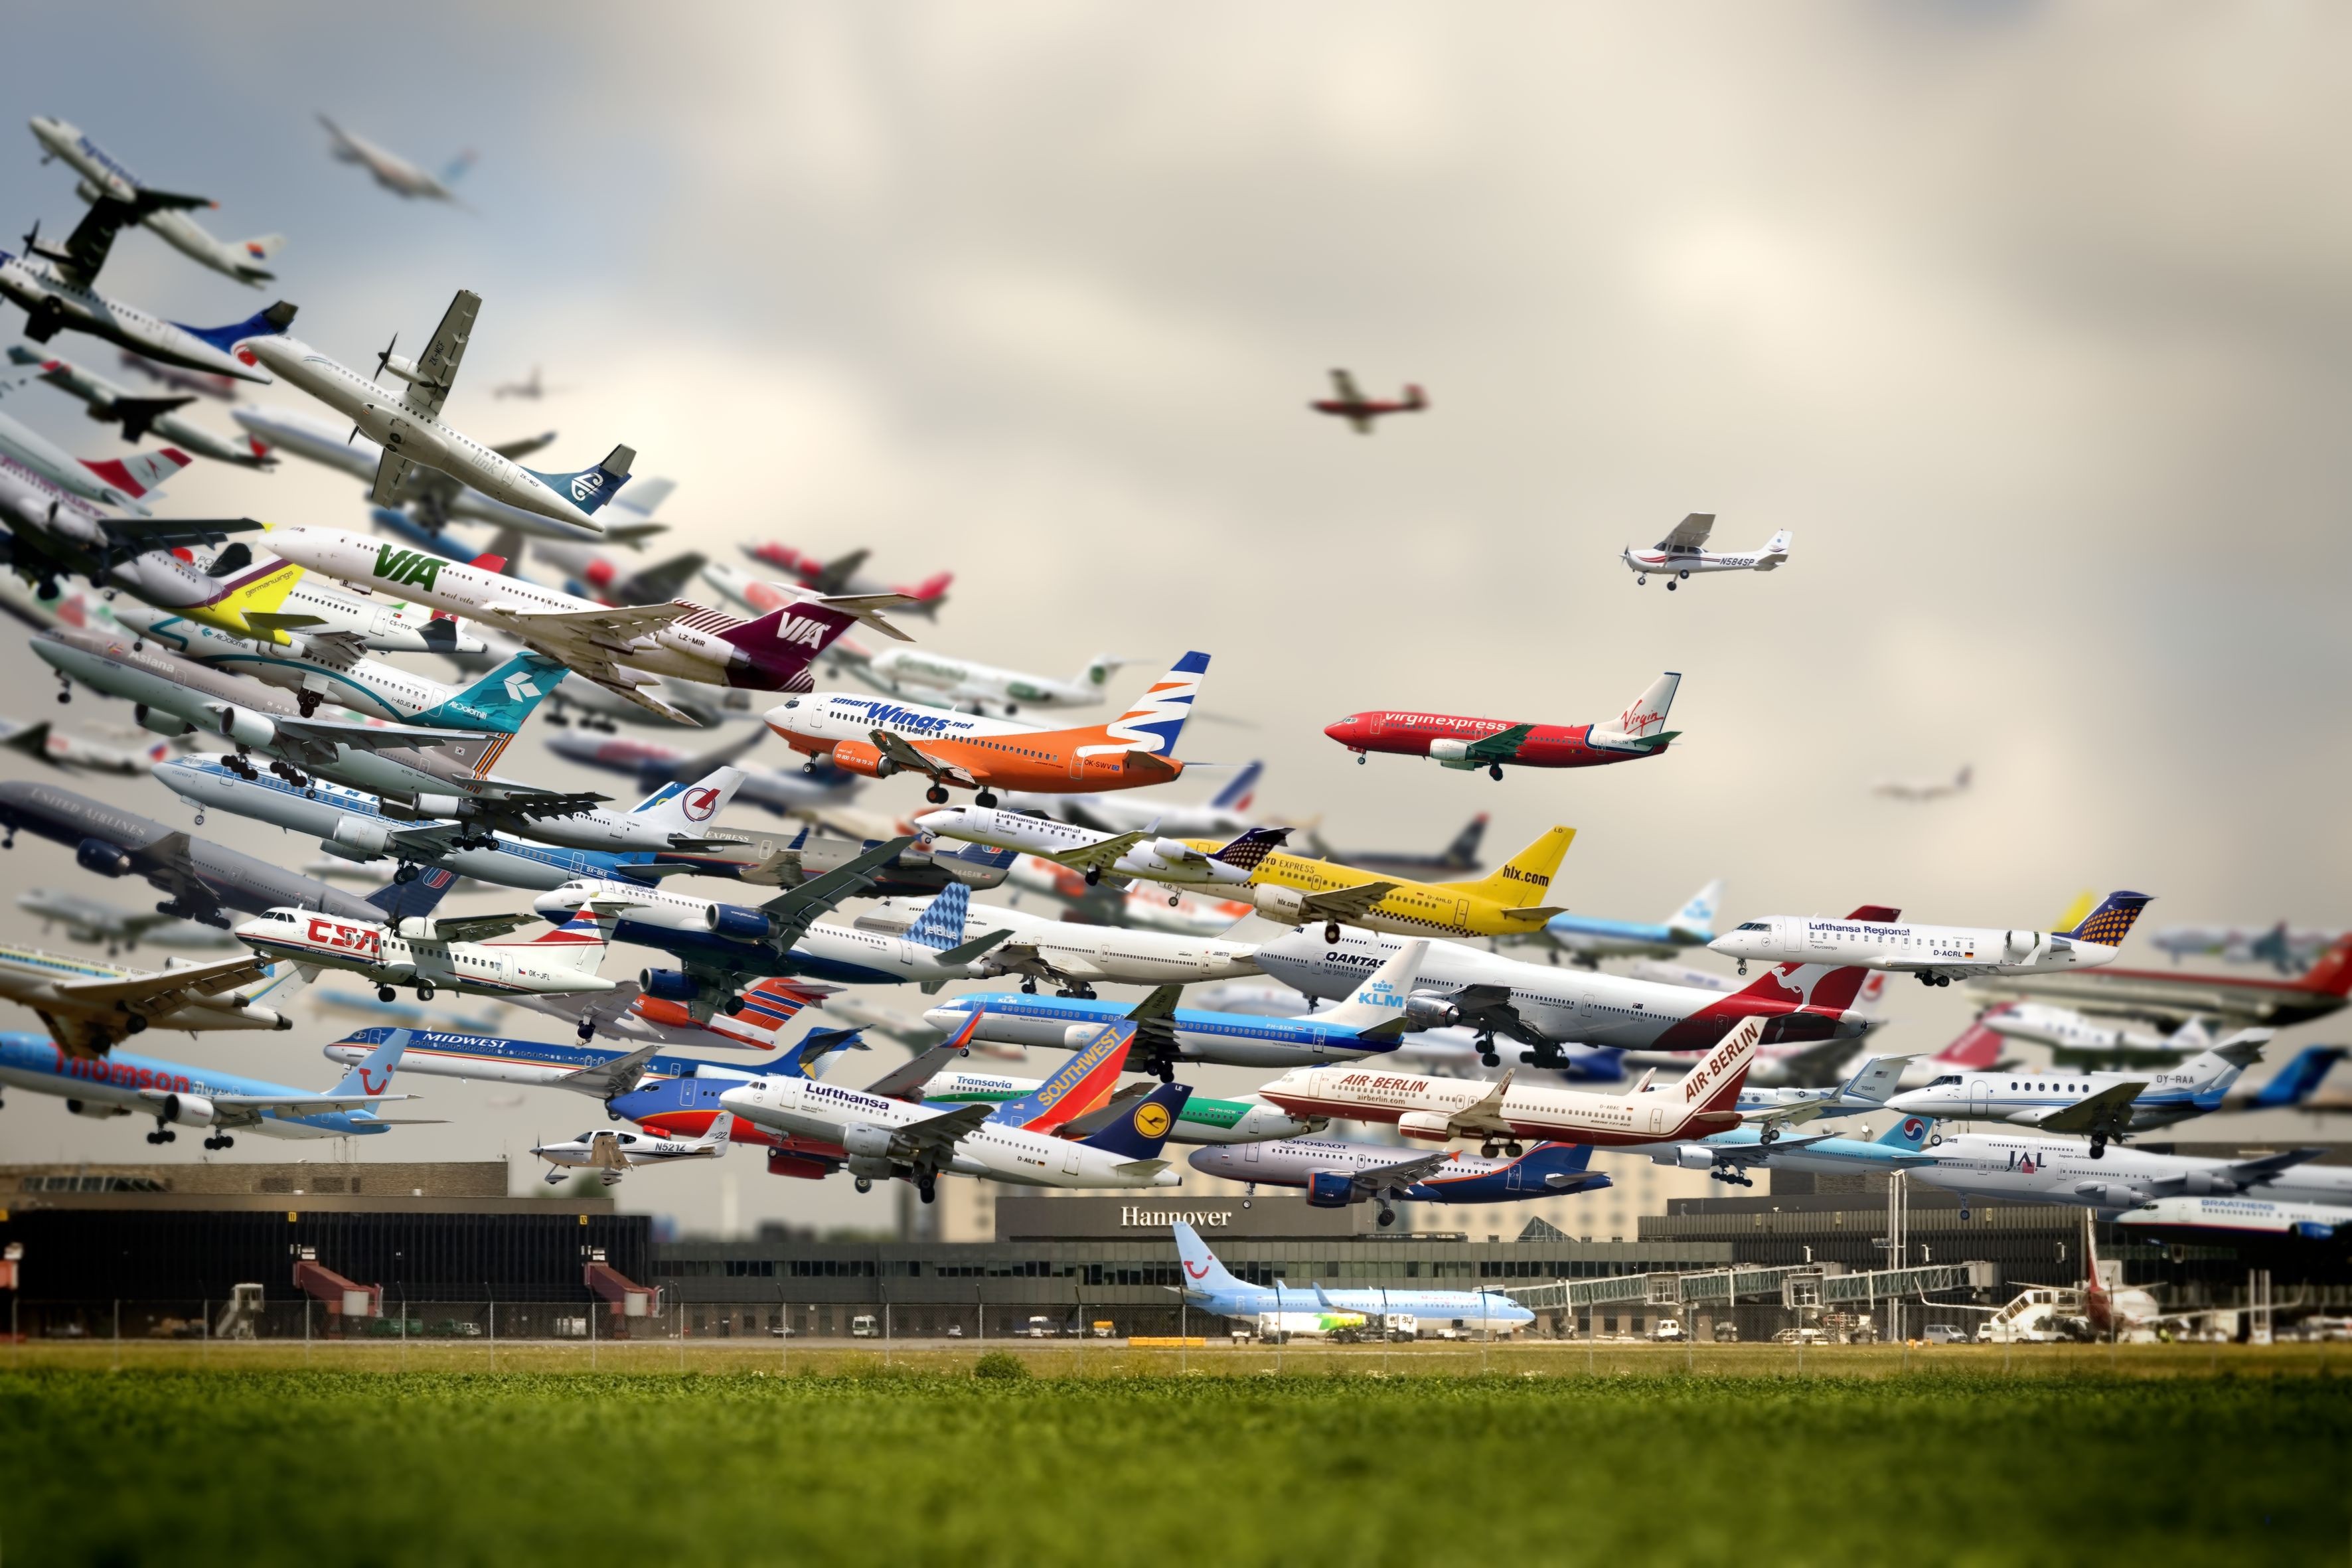 General 3543x2362 airplane Germany airport aircraft passenger aircraft Hanover digital art collage